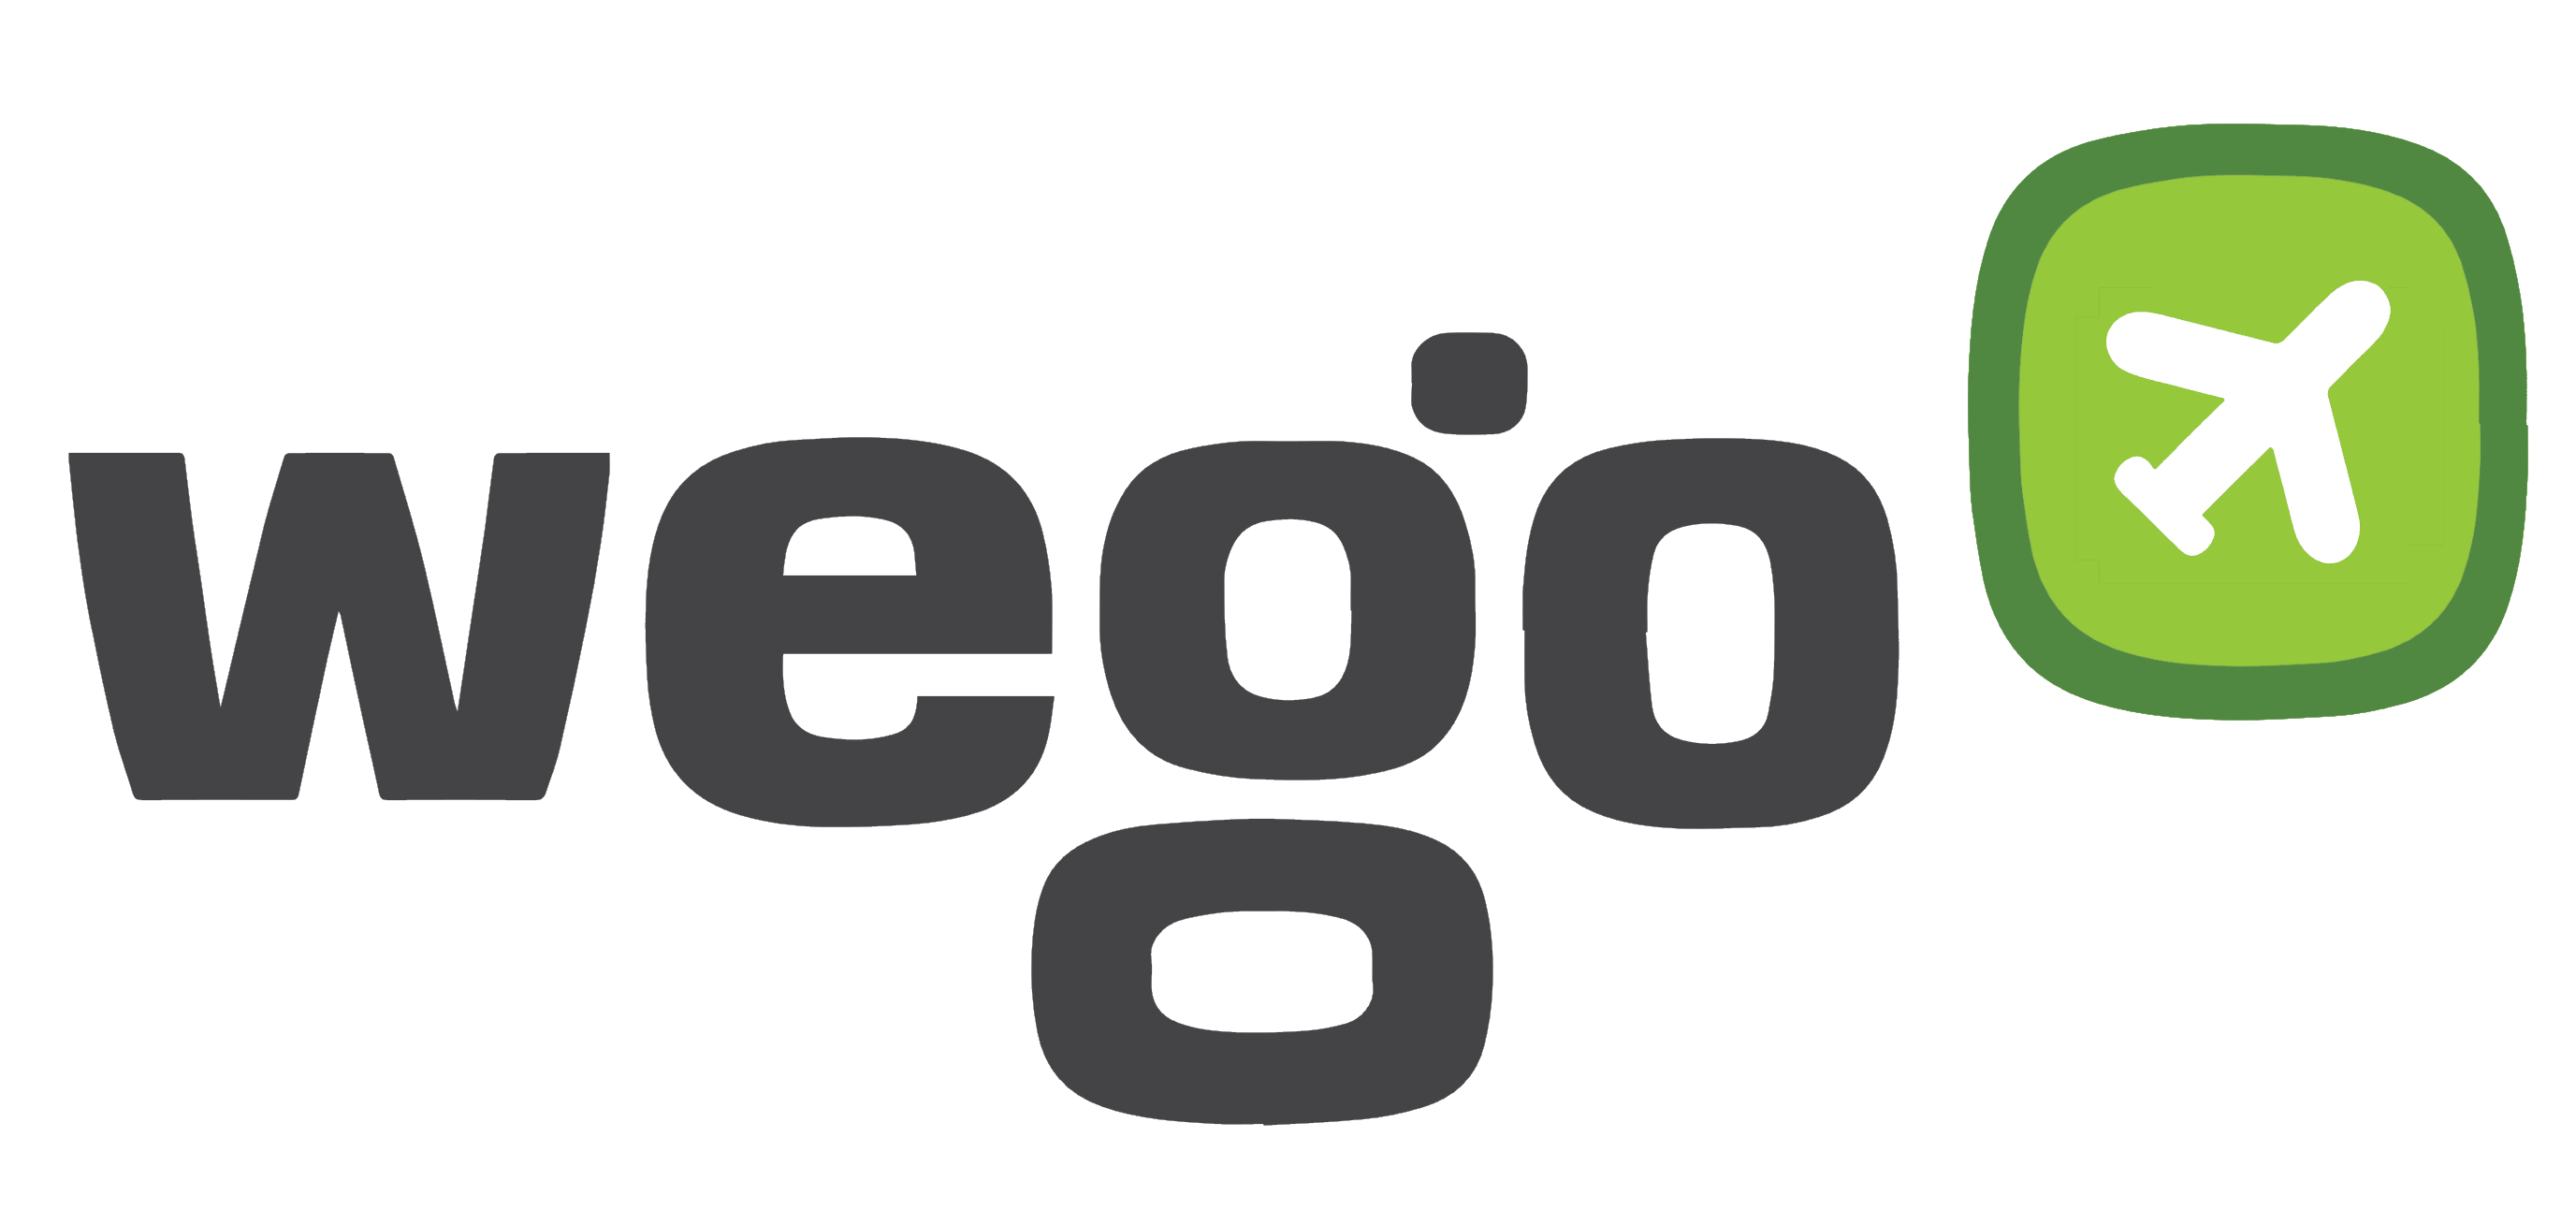 Wego logo, logotype